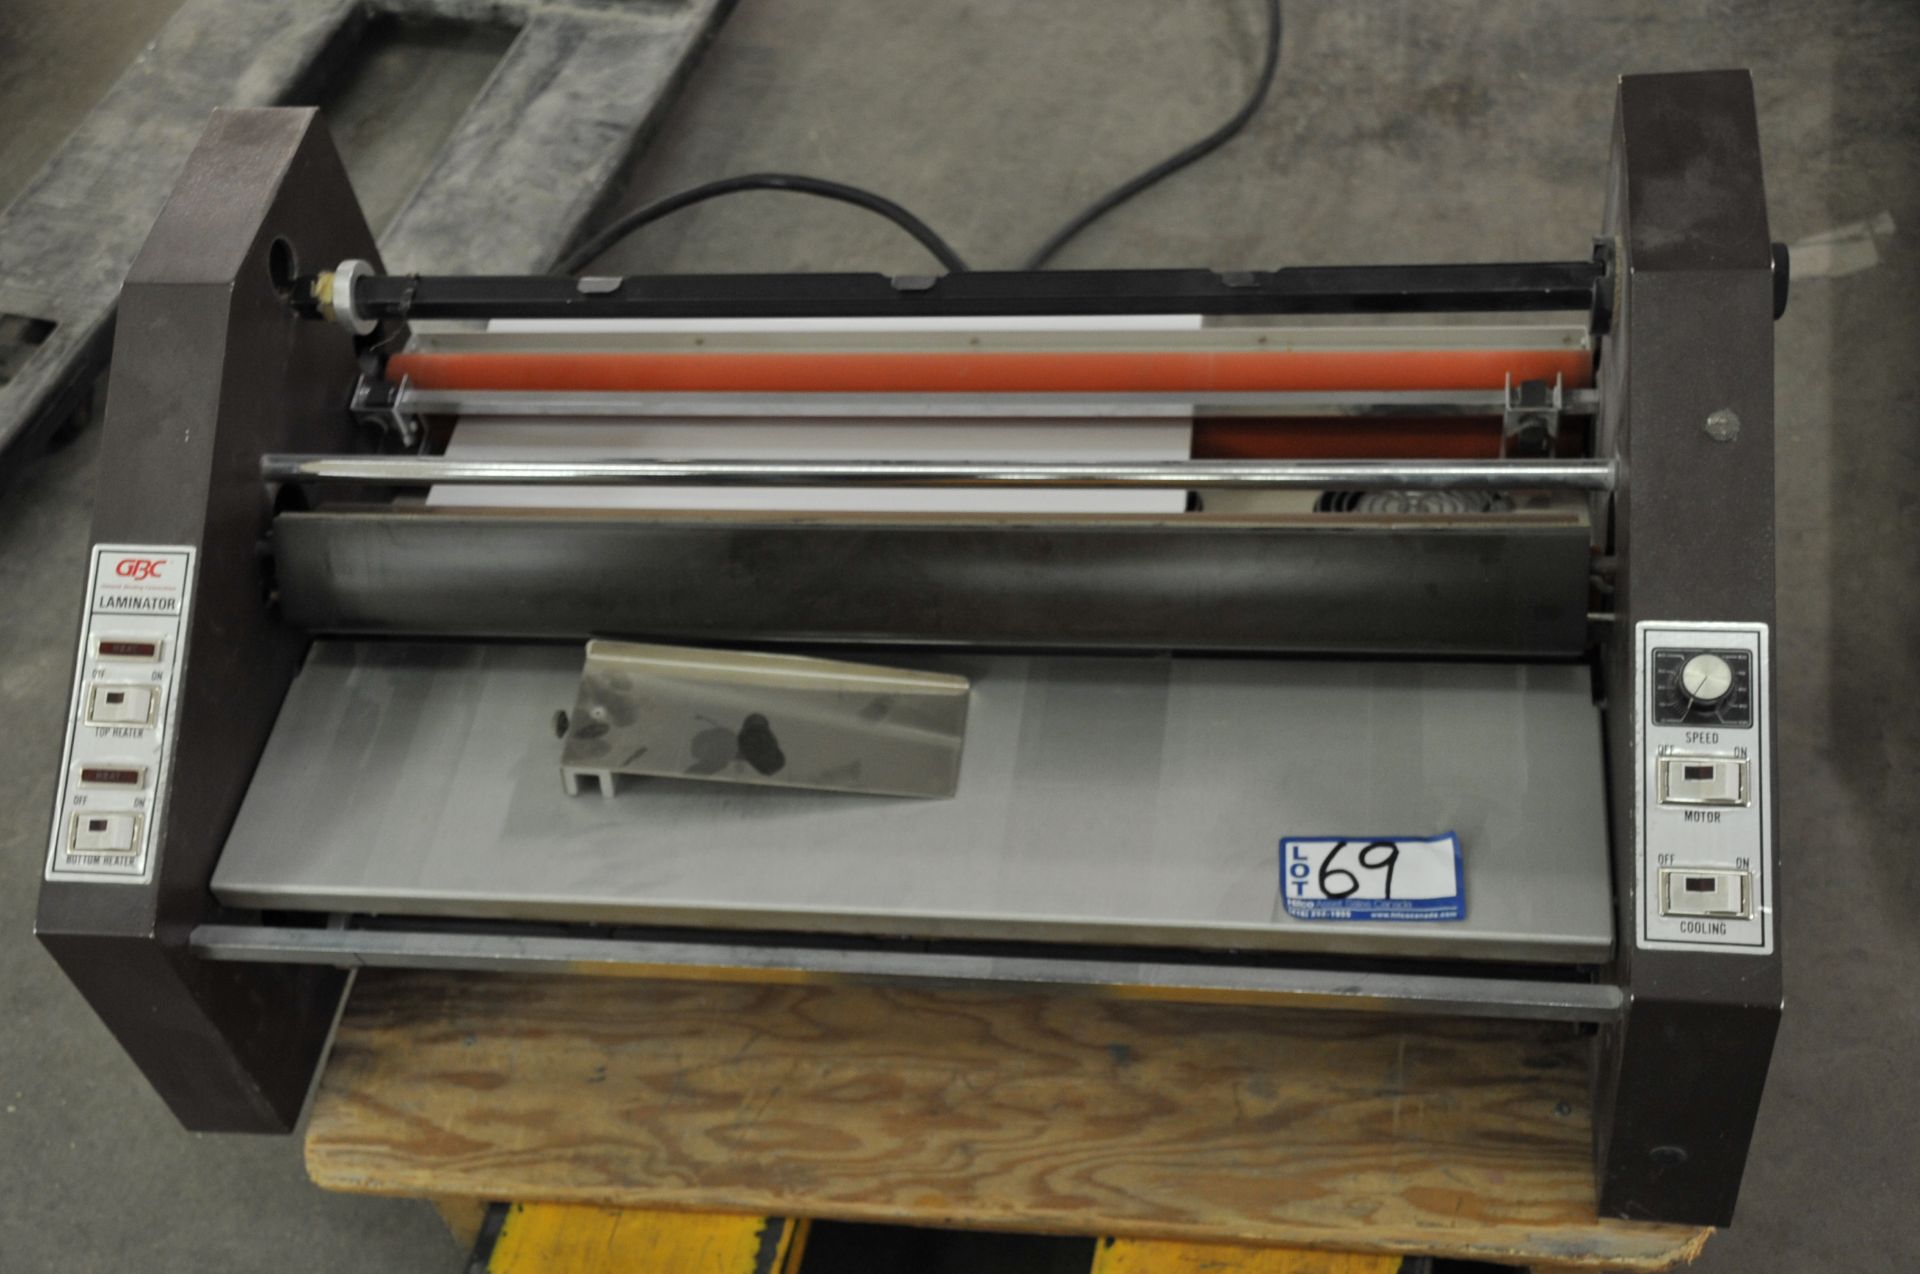 GBC Model 568LM-1 Laminator - Printing; Serial Number: N/A